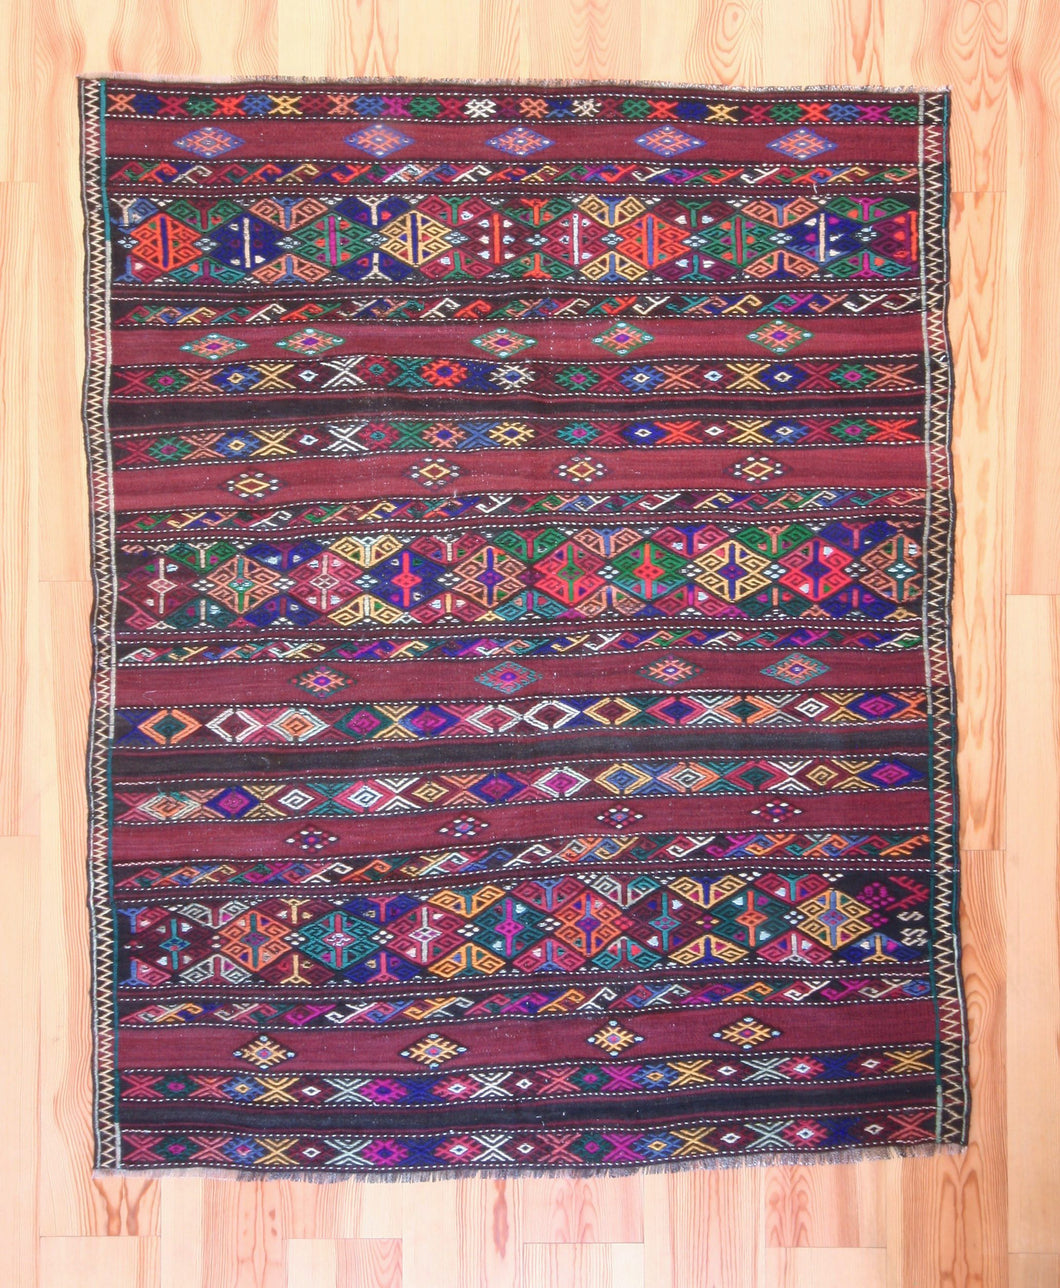 6x8 Vintage Anatolian Turkish Kilim Area Rug | Strips with vibrant colors and bold symbols | SKU 457